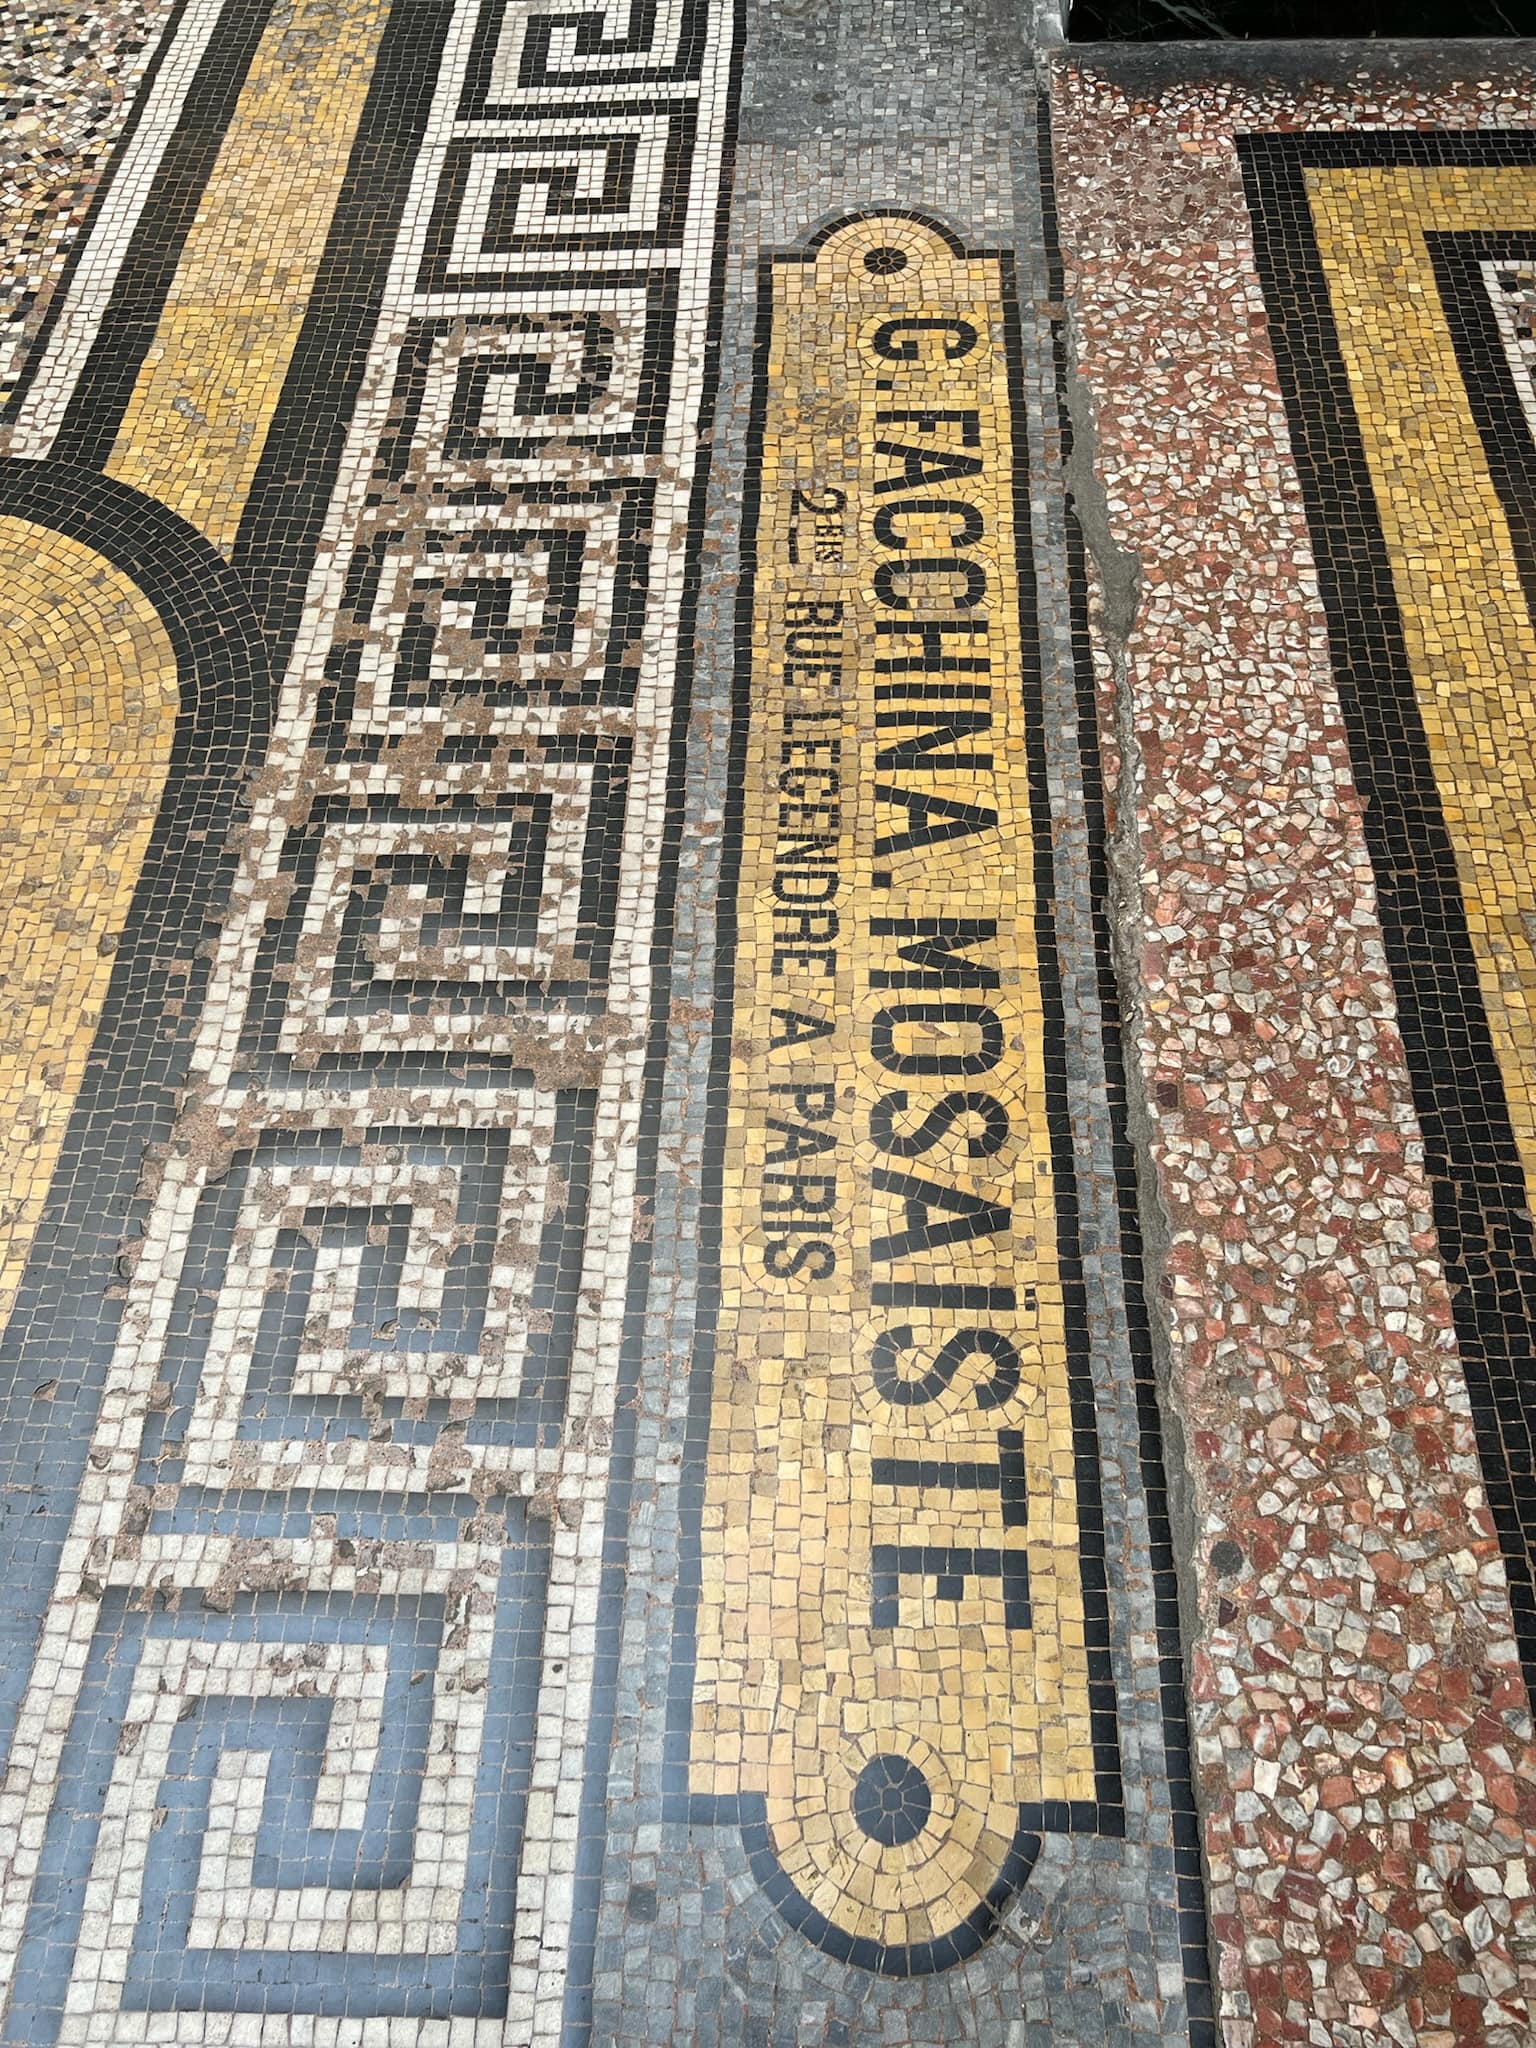 A mosaic floor in Paris